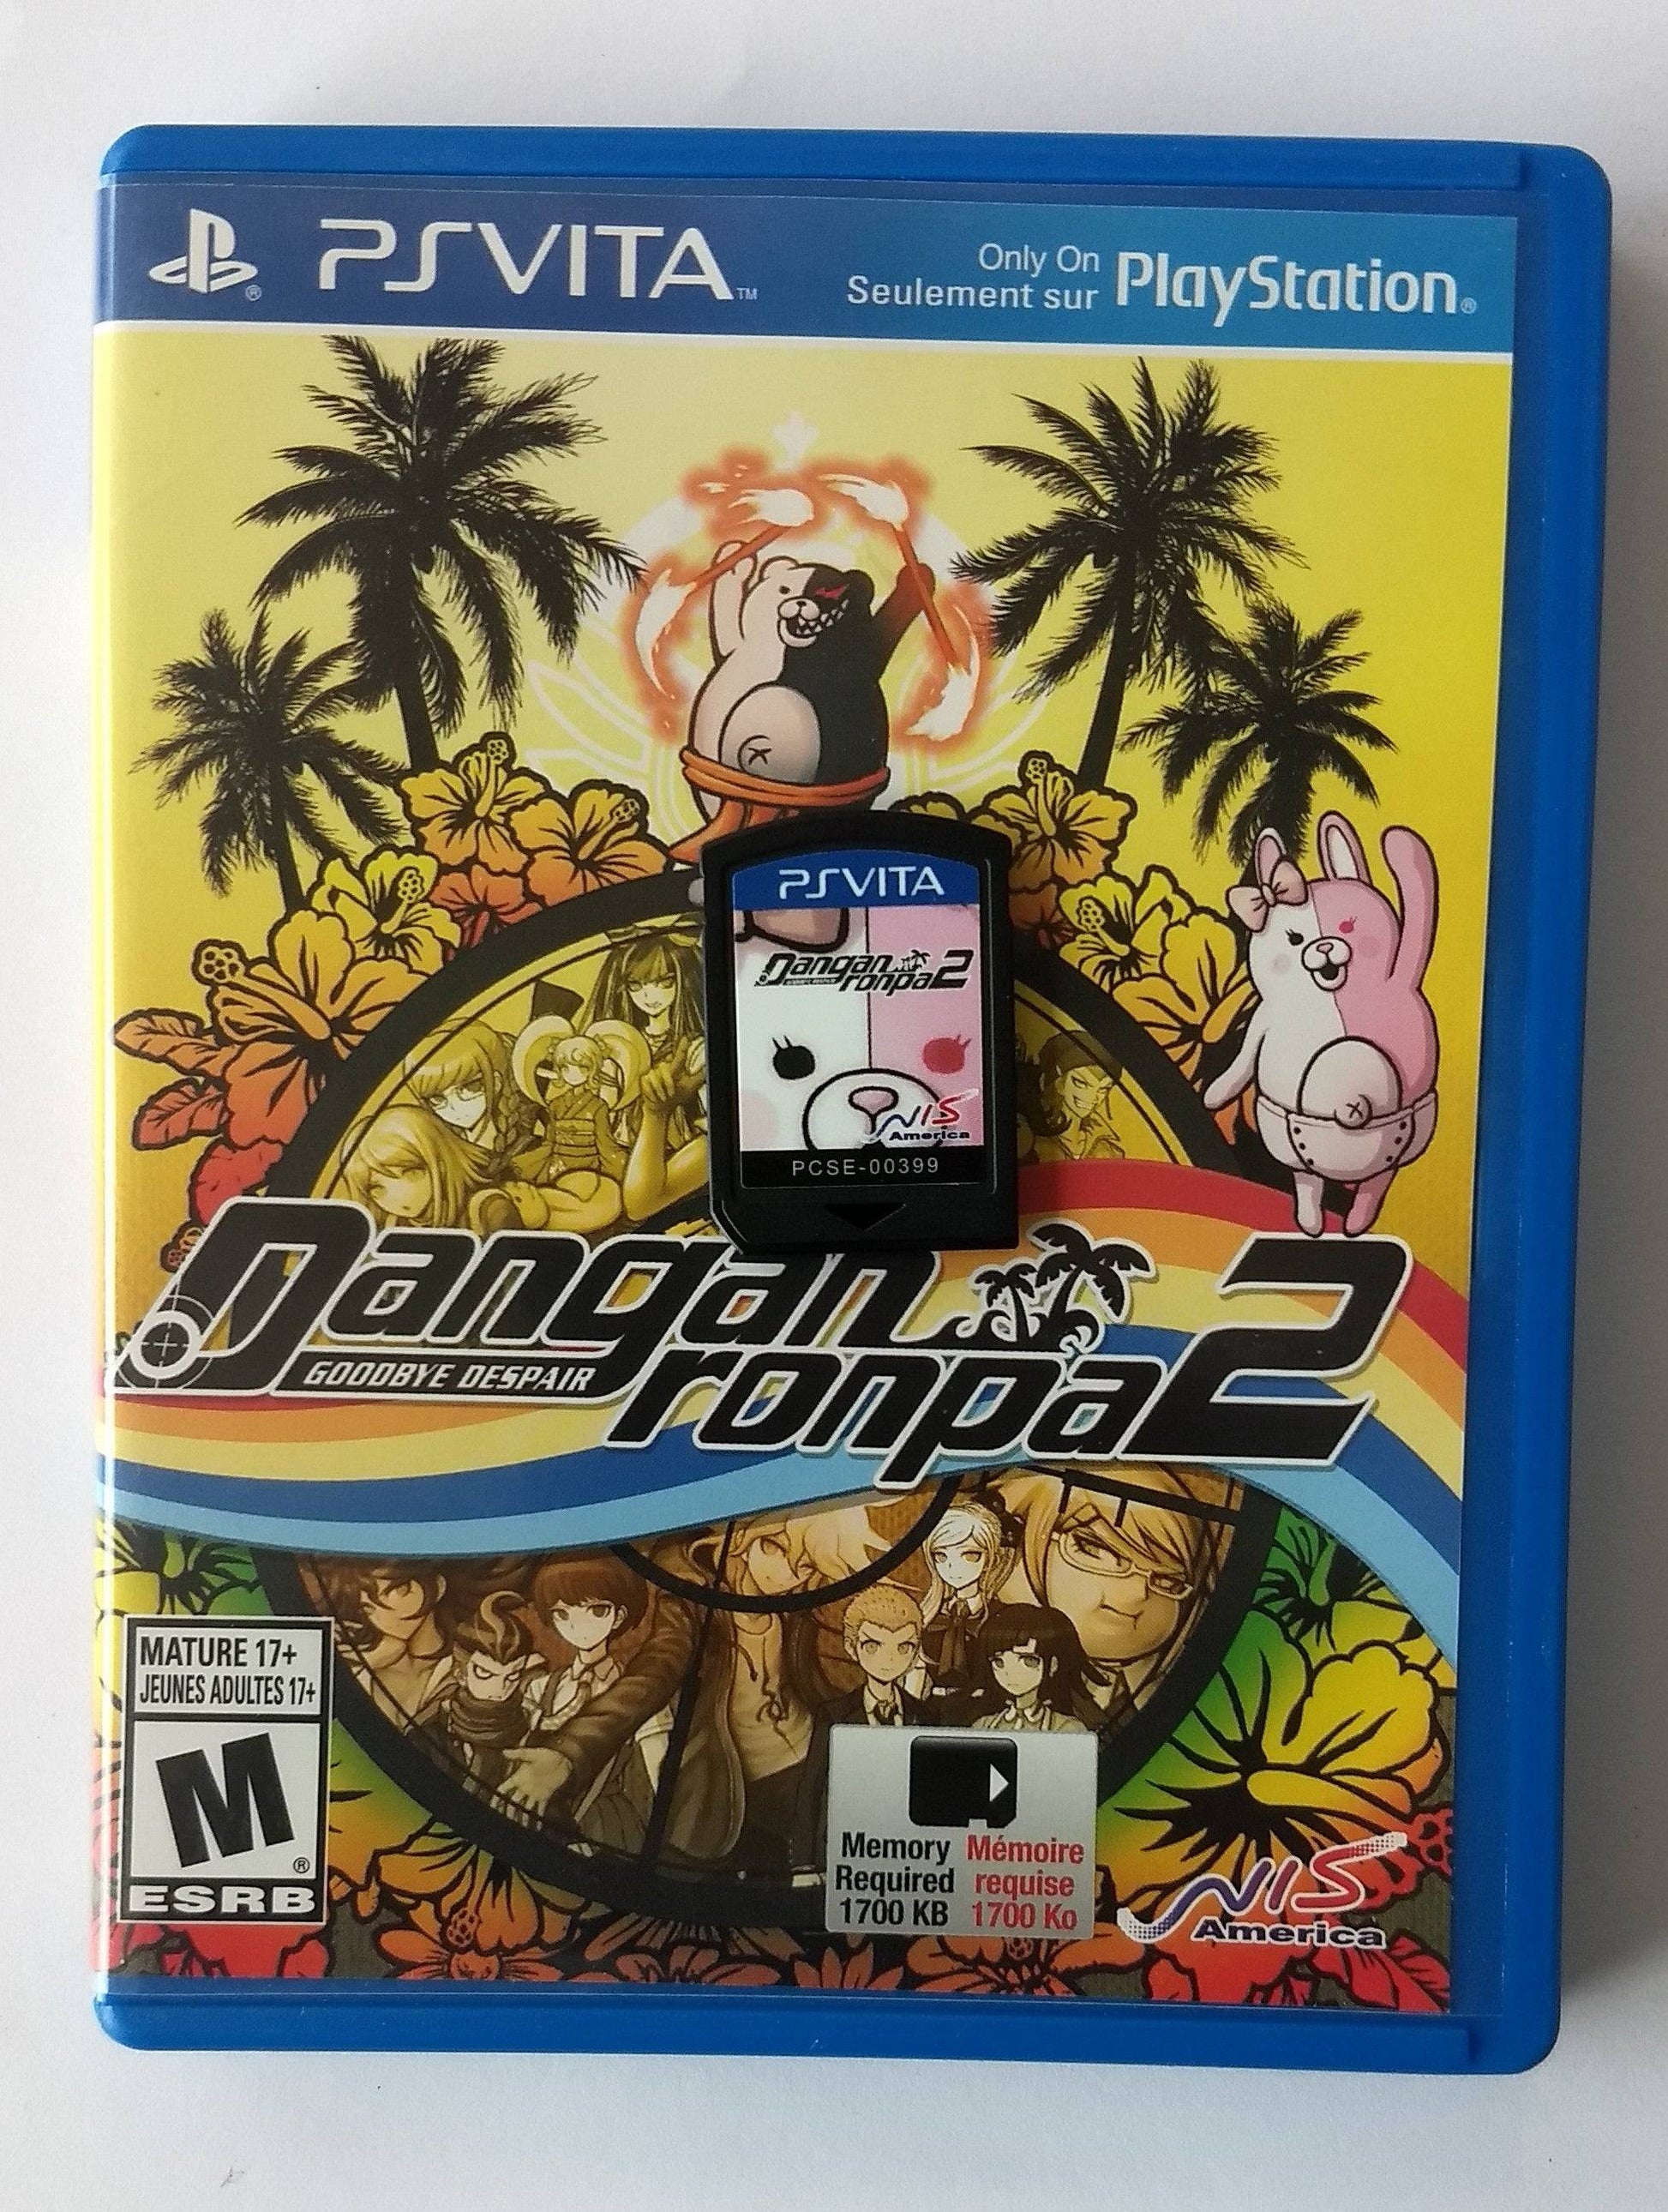 DANGANRONPA 2: GOODBYE DESPAIR PLAYSTATION VITA - jeux video game-x